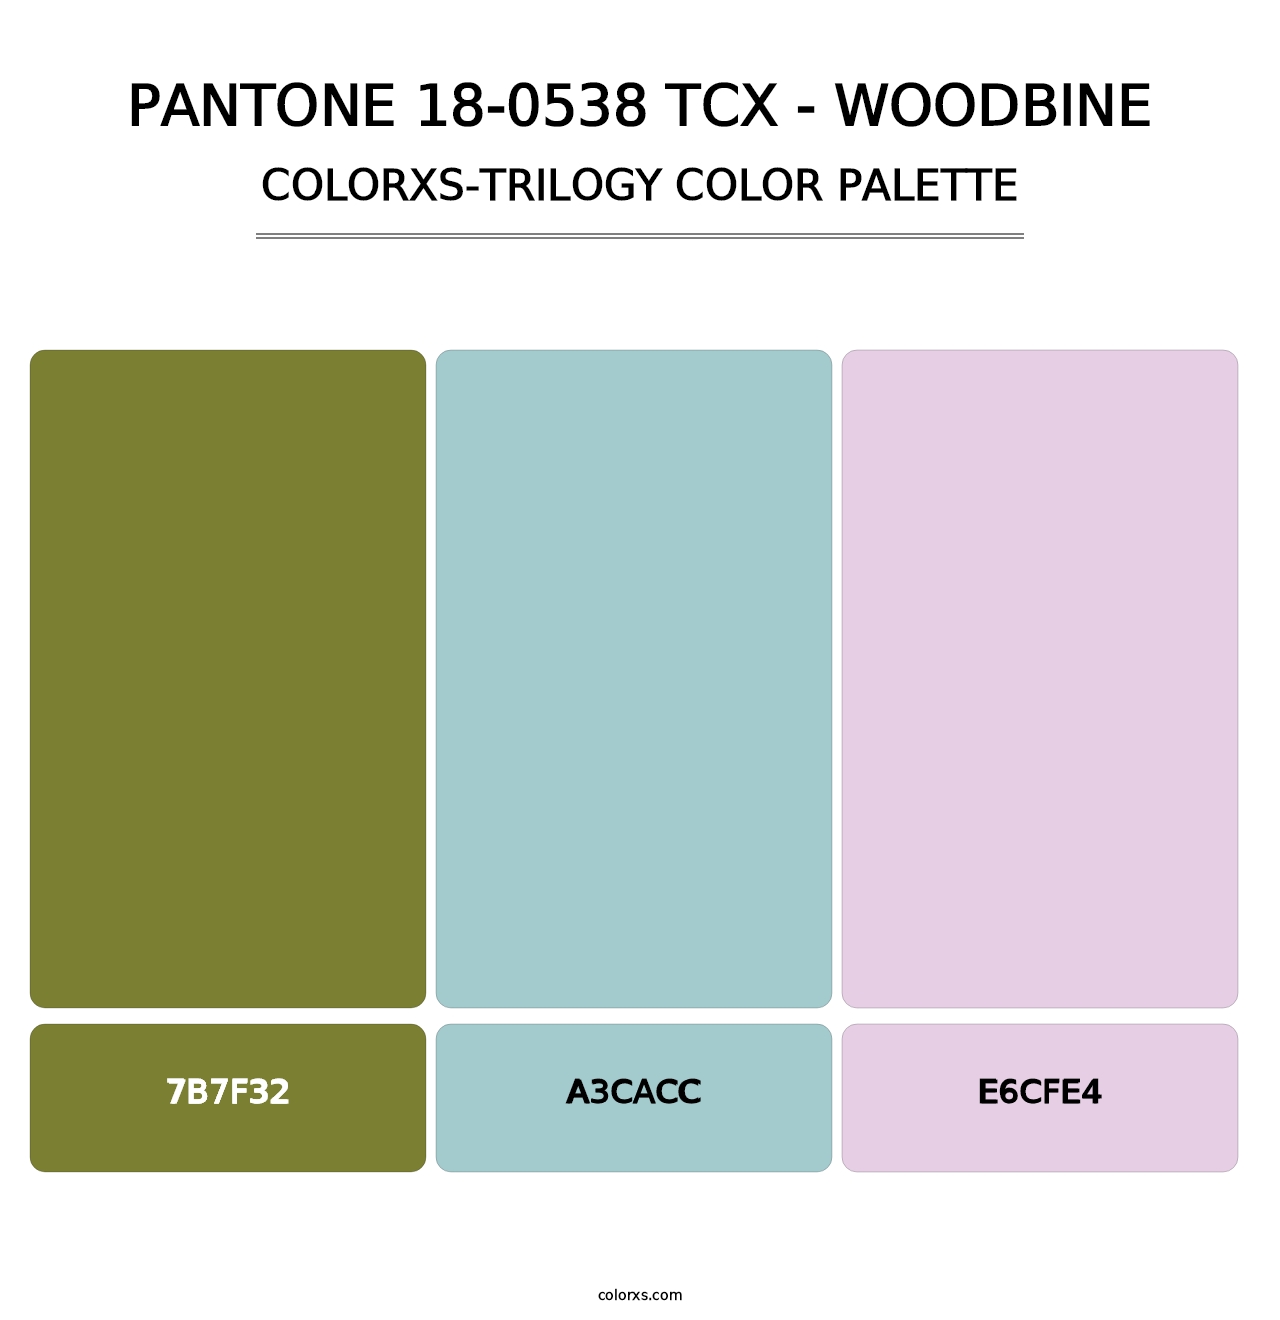 PANTONE 18-0538 TCX - Woodbine - Colorxs Trilogy Palette